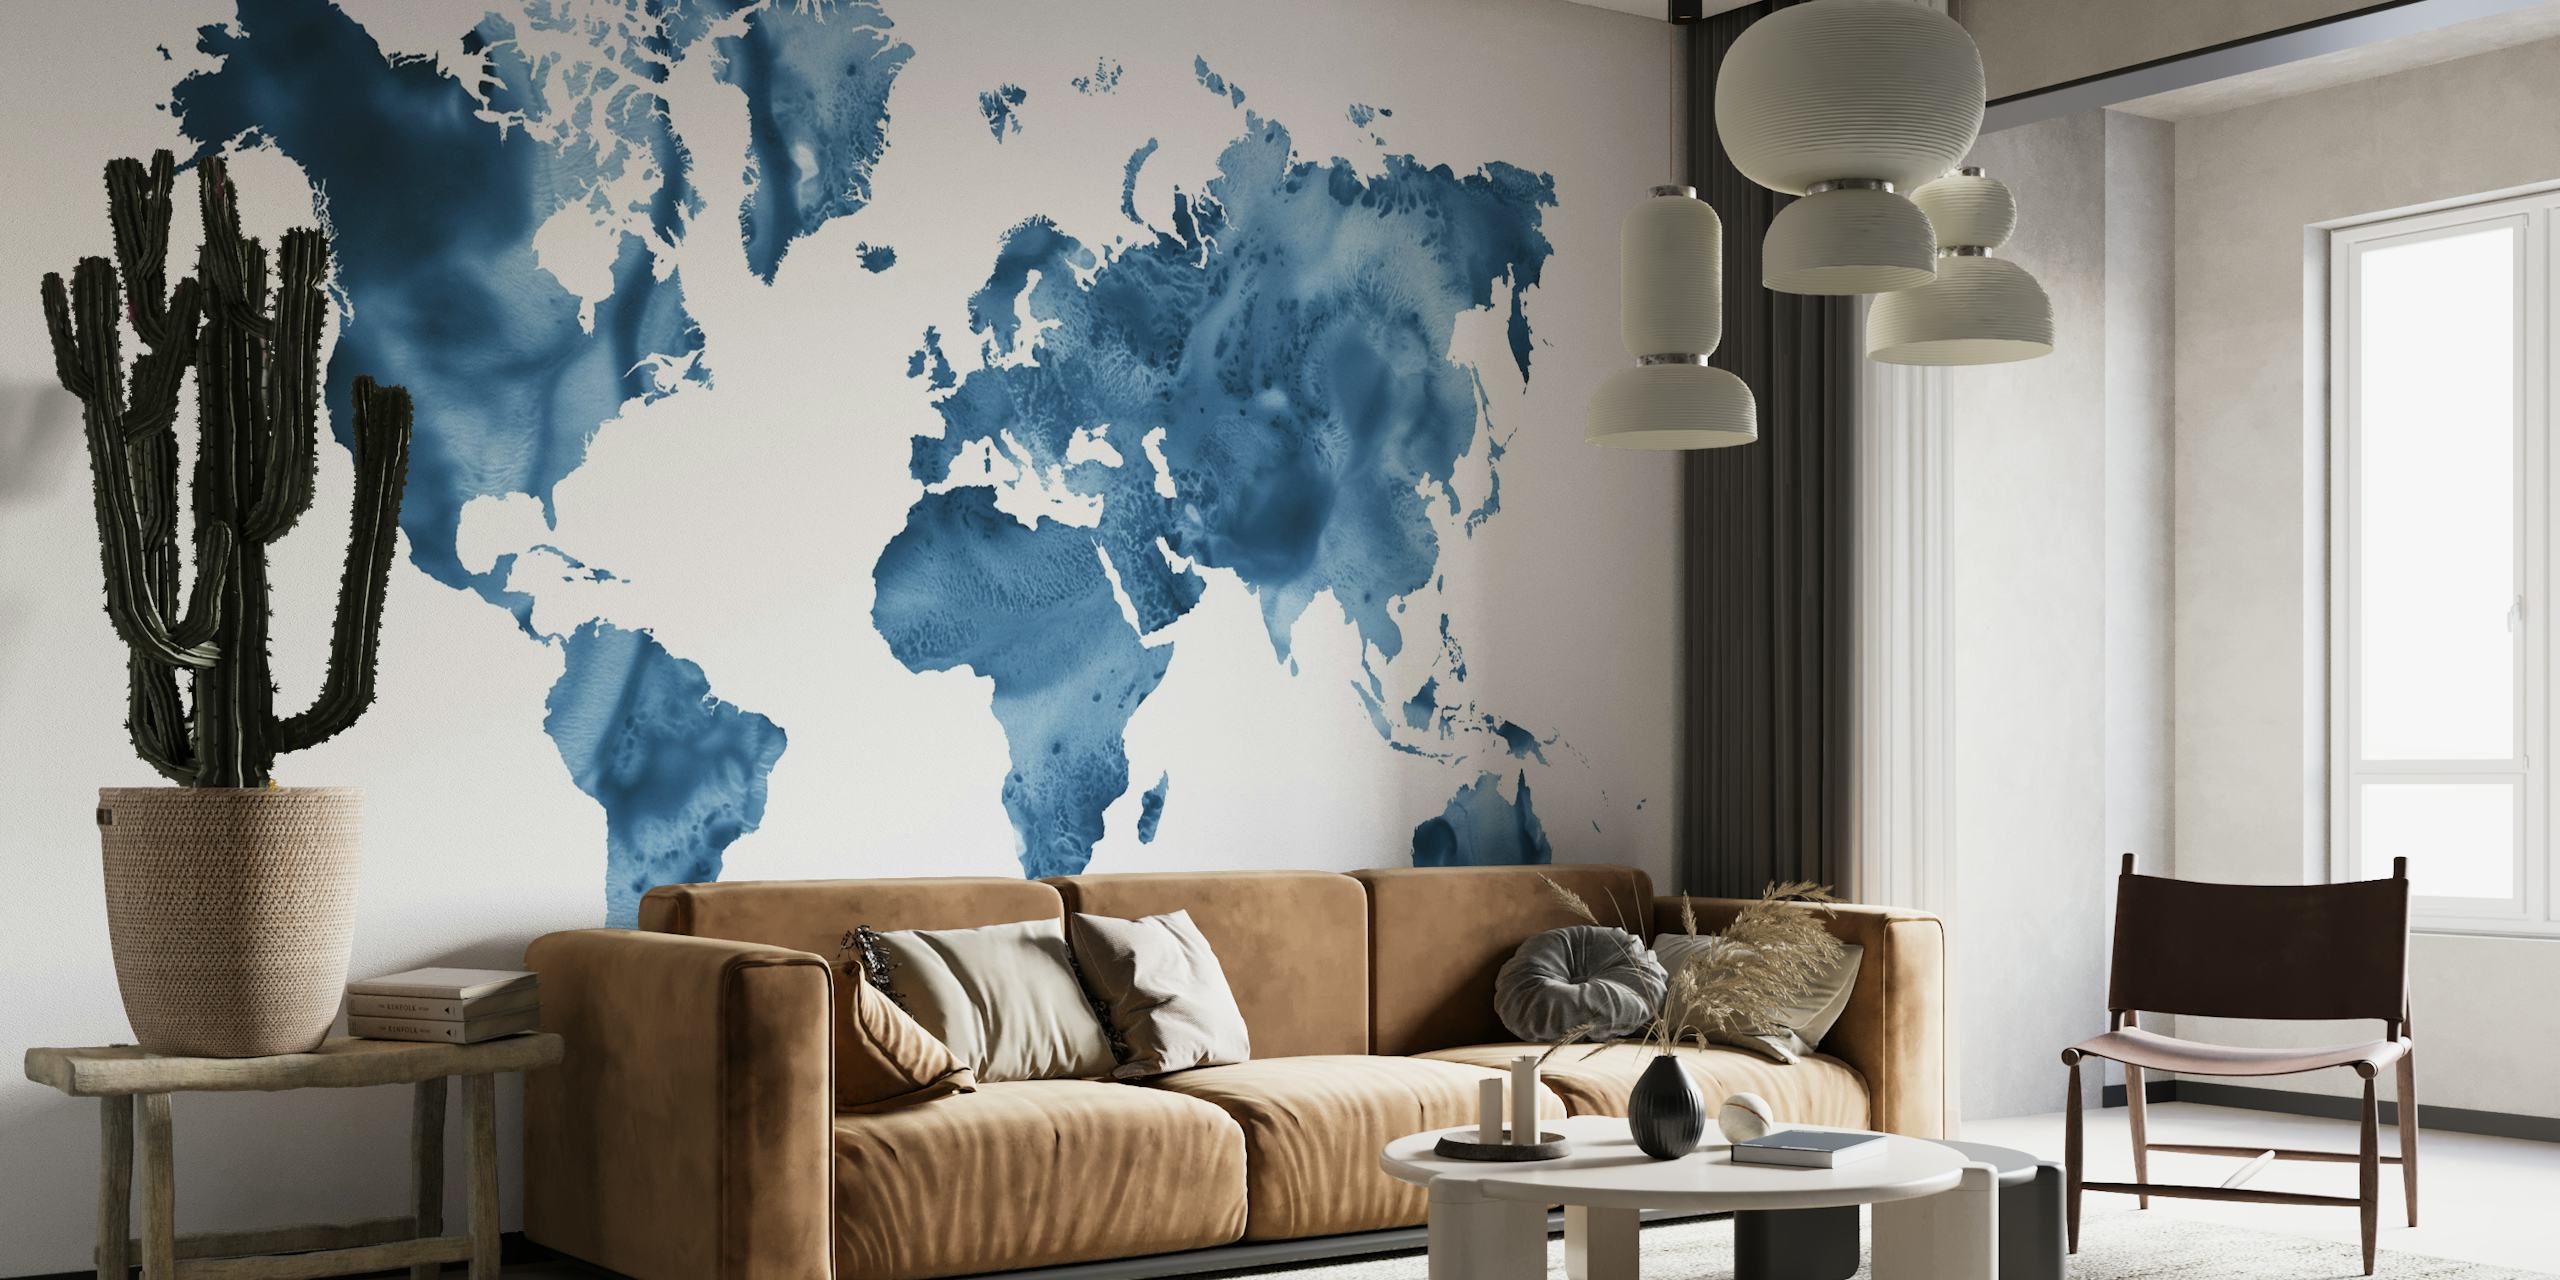 Watercolor world map behang